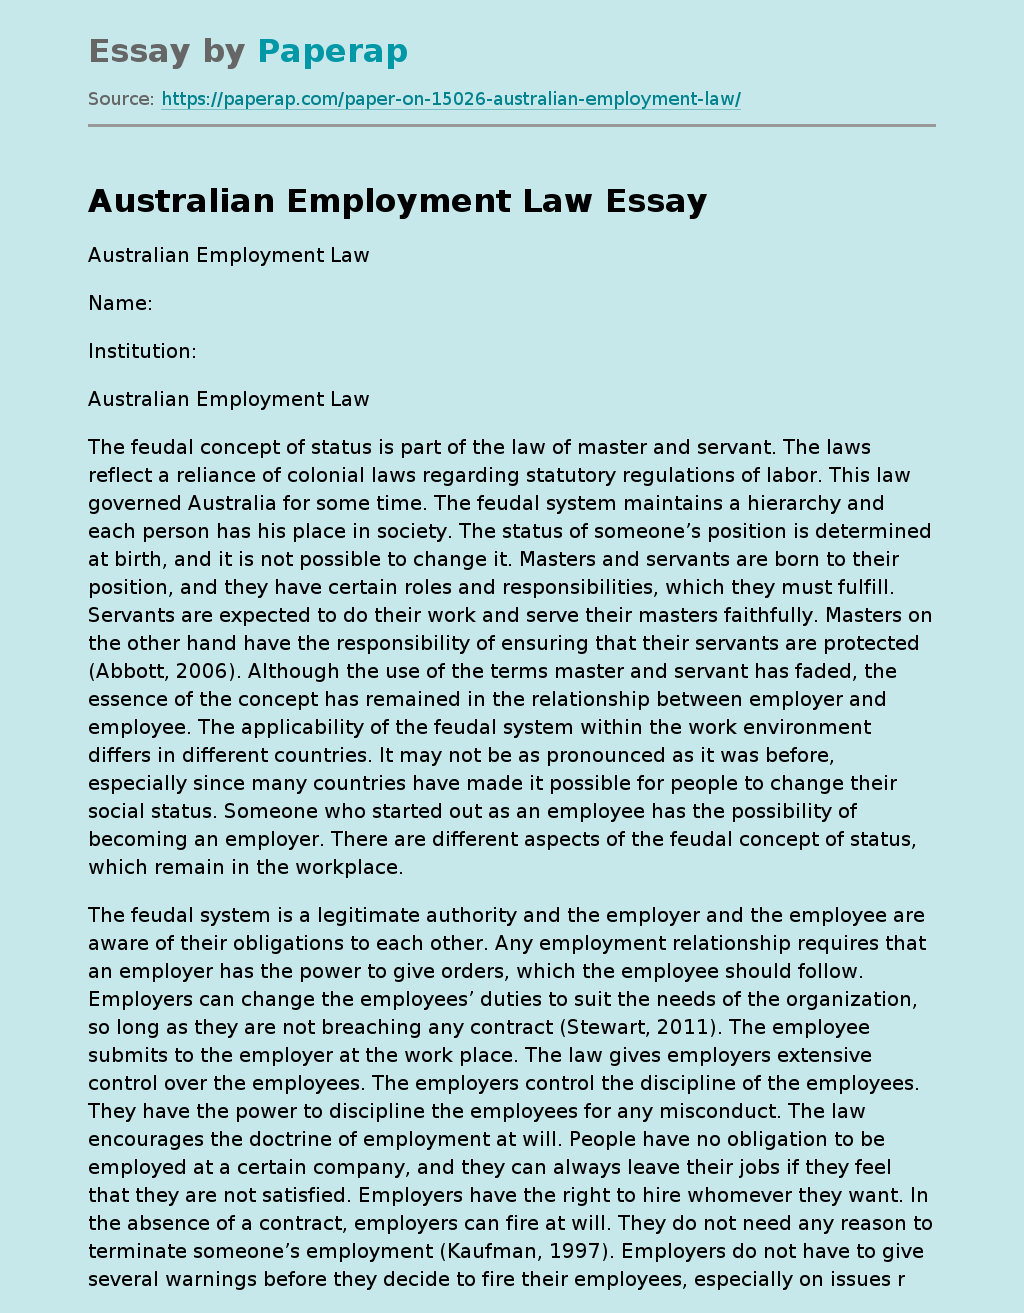 The Australian Employment Law